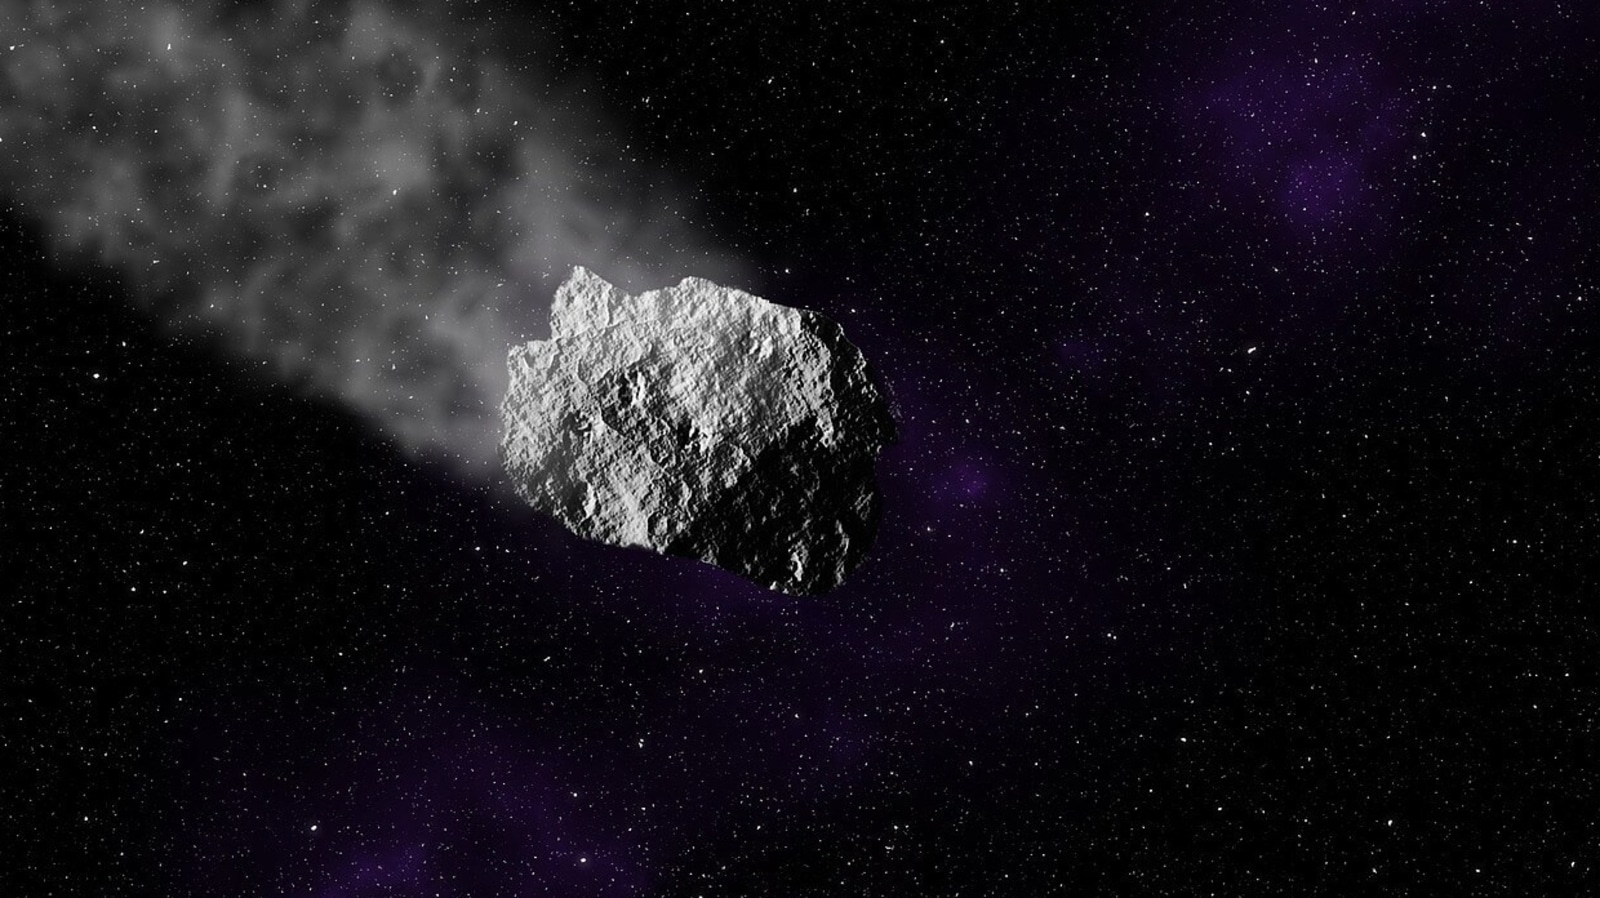 asteroid-today-menacing-rock-speeding-towards-earth-clocked-at-38448-kmph-says-nasa